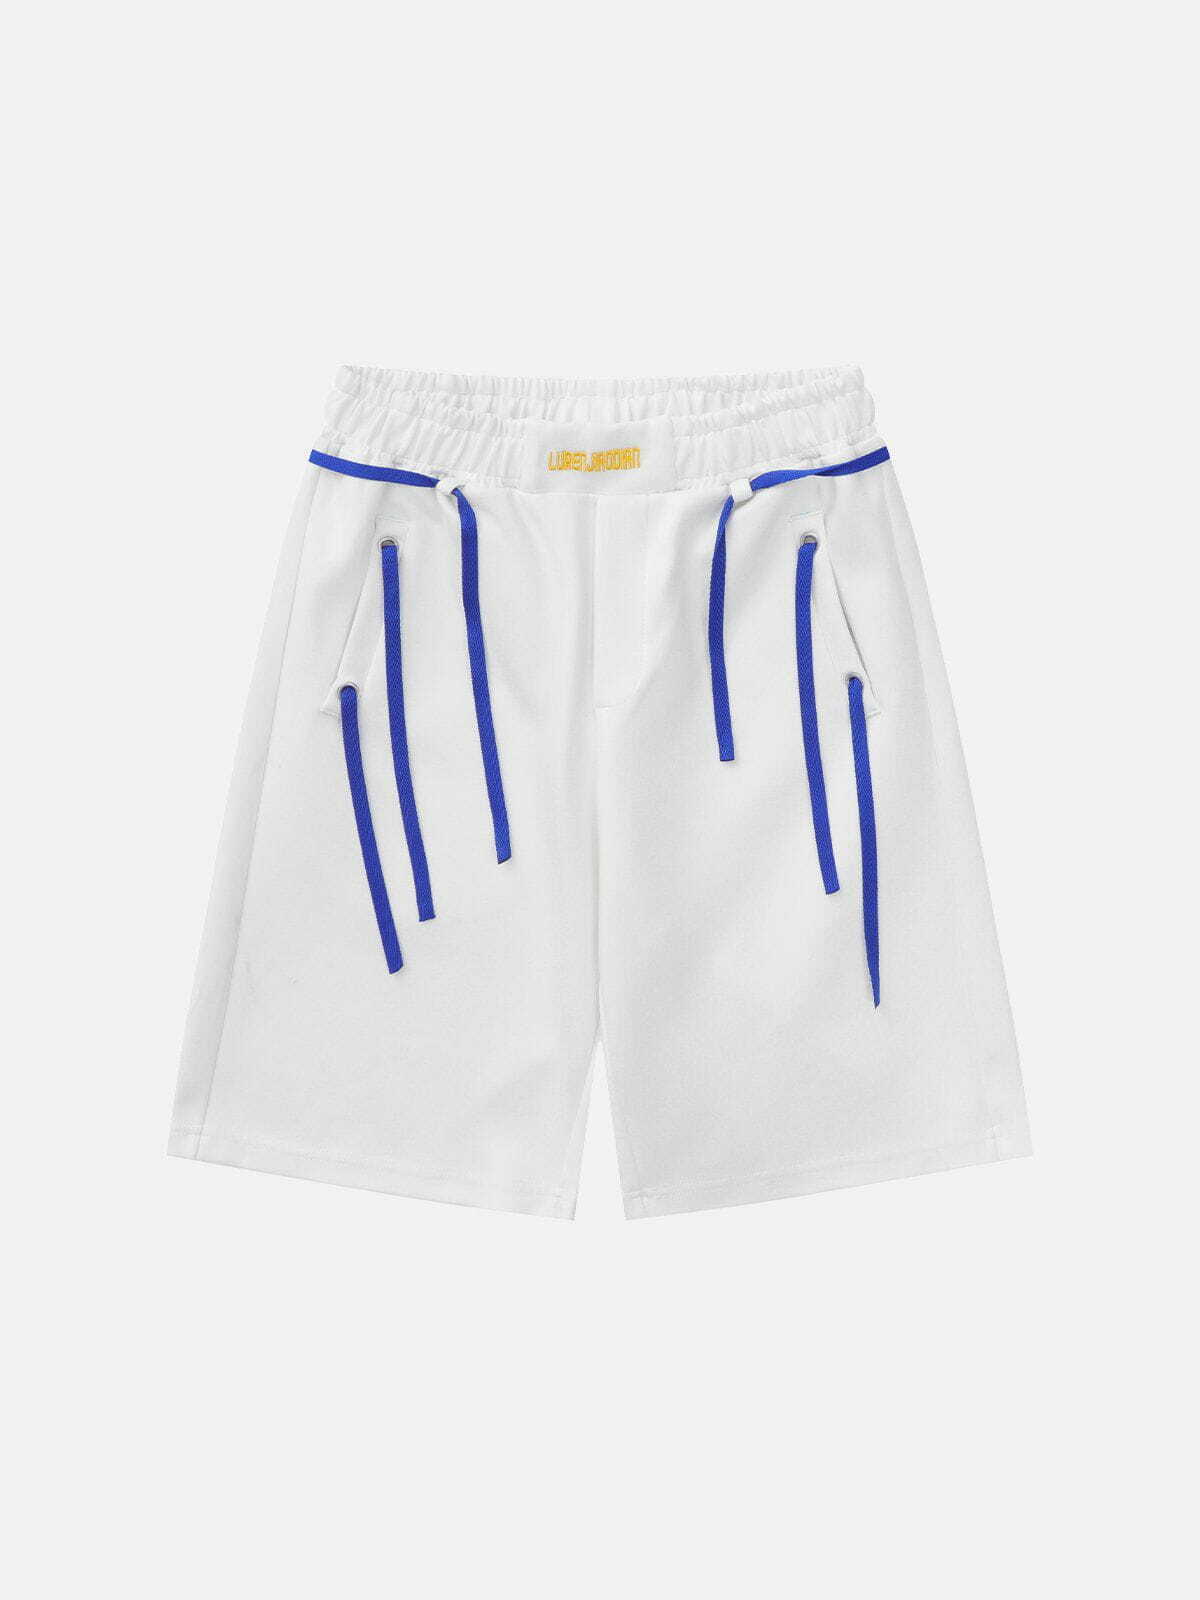 colorblock line design shorts [trendy] 4689